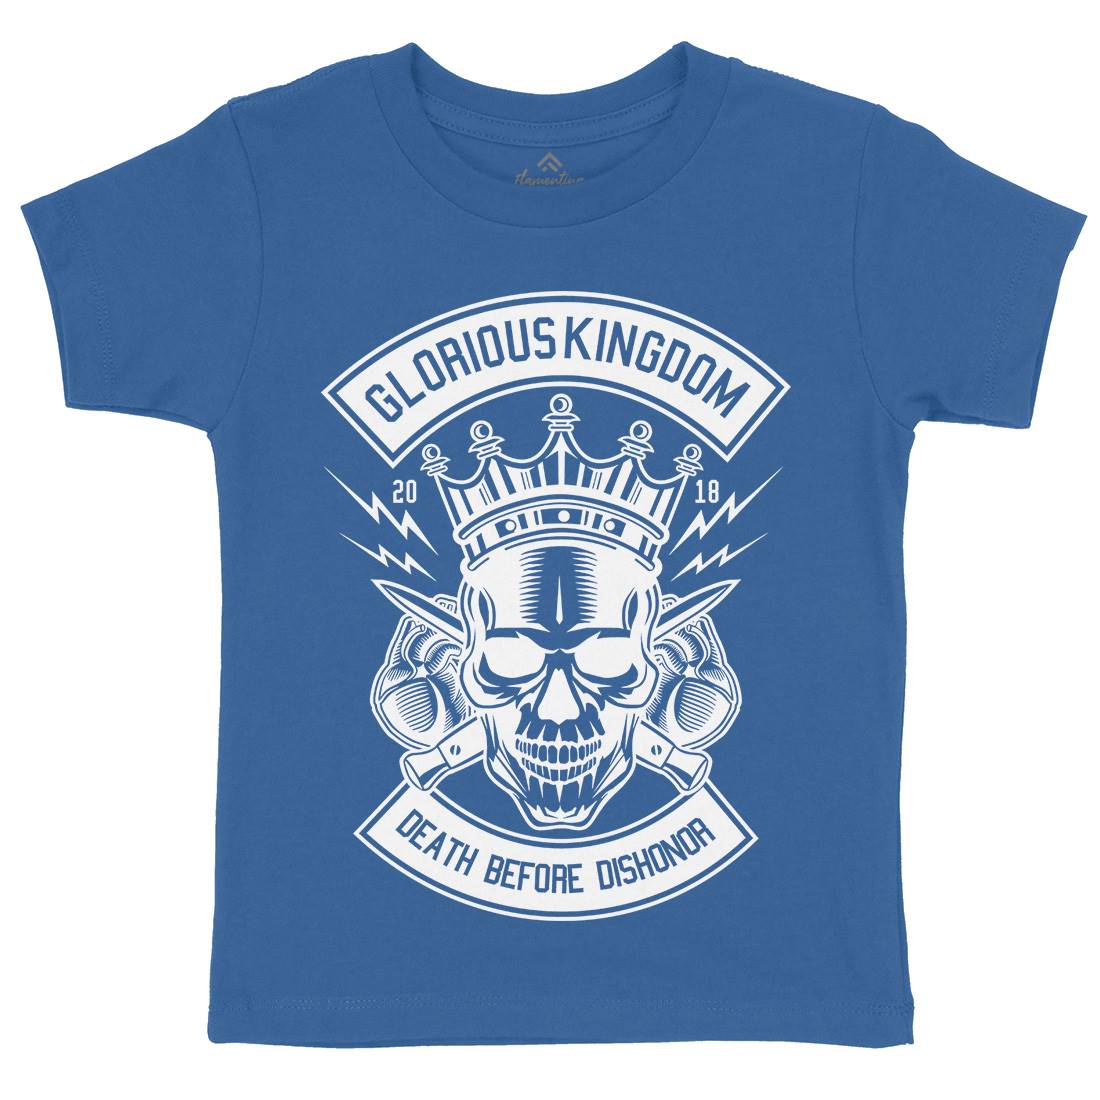 Glorious Kingdom Kids Crew Neck T-Shirt Retro B546